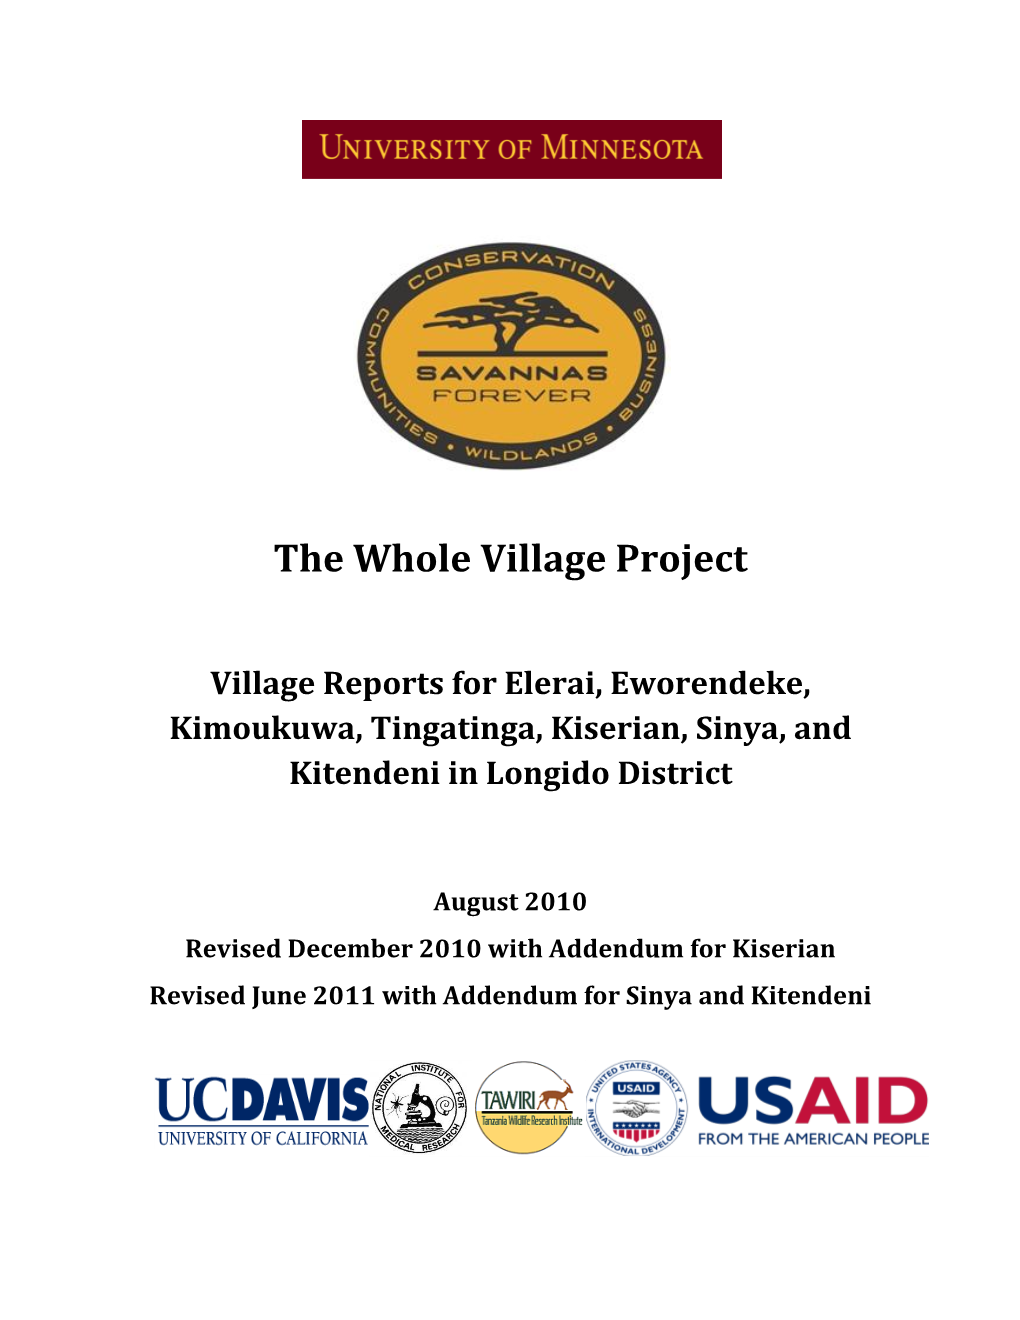 Longido District Report